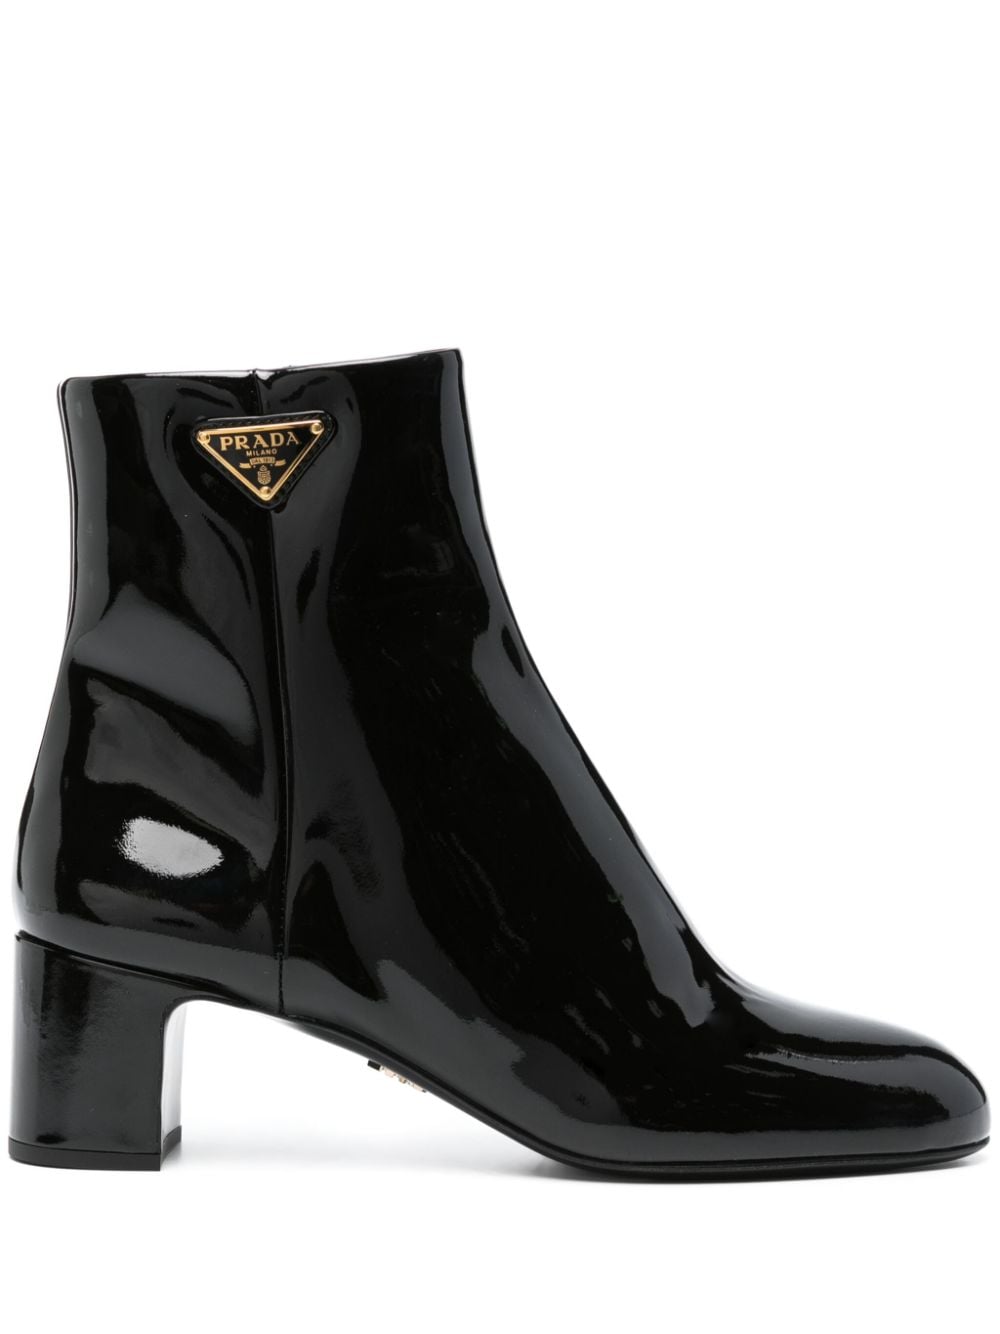 Prada 55mm patent leather boots - Black